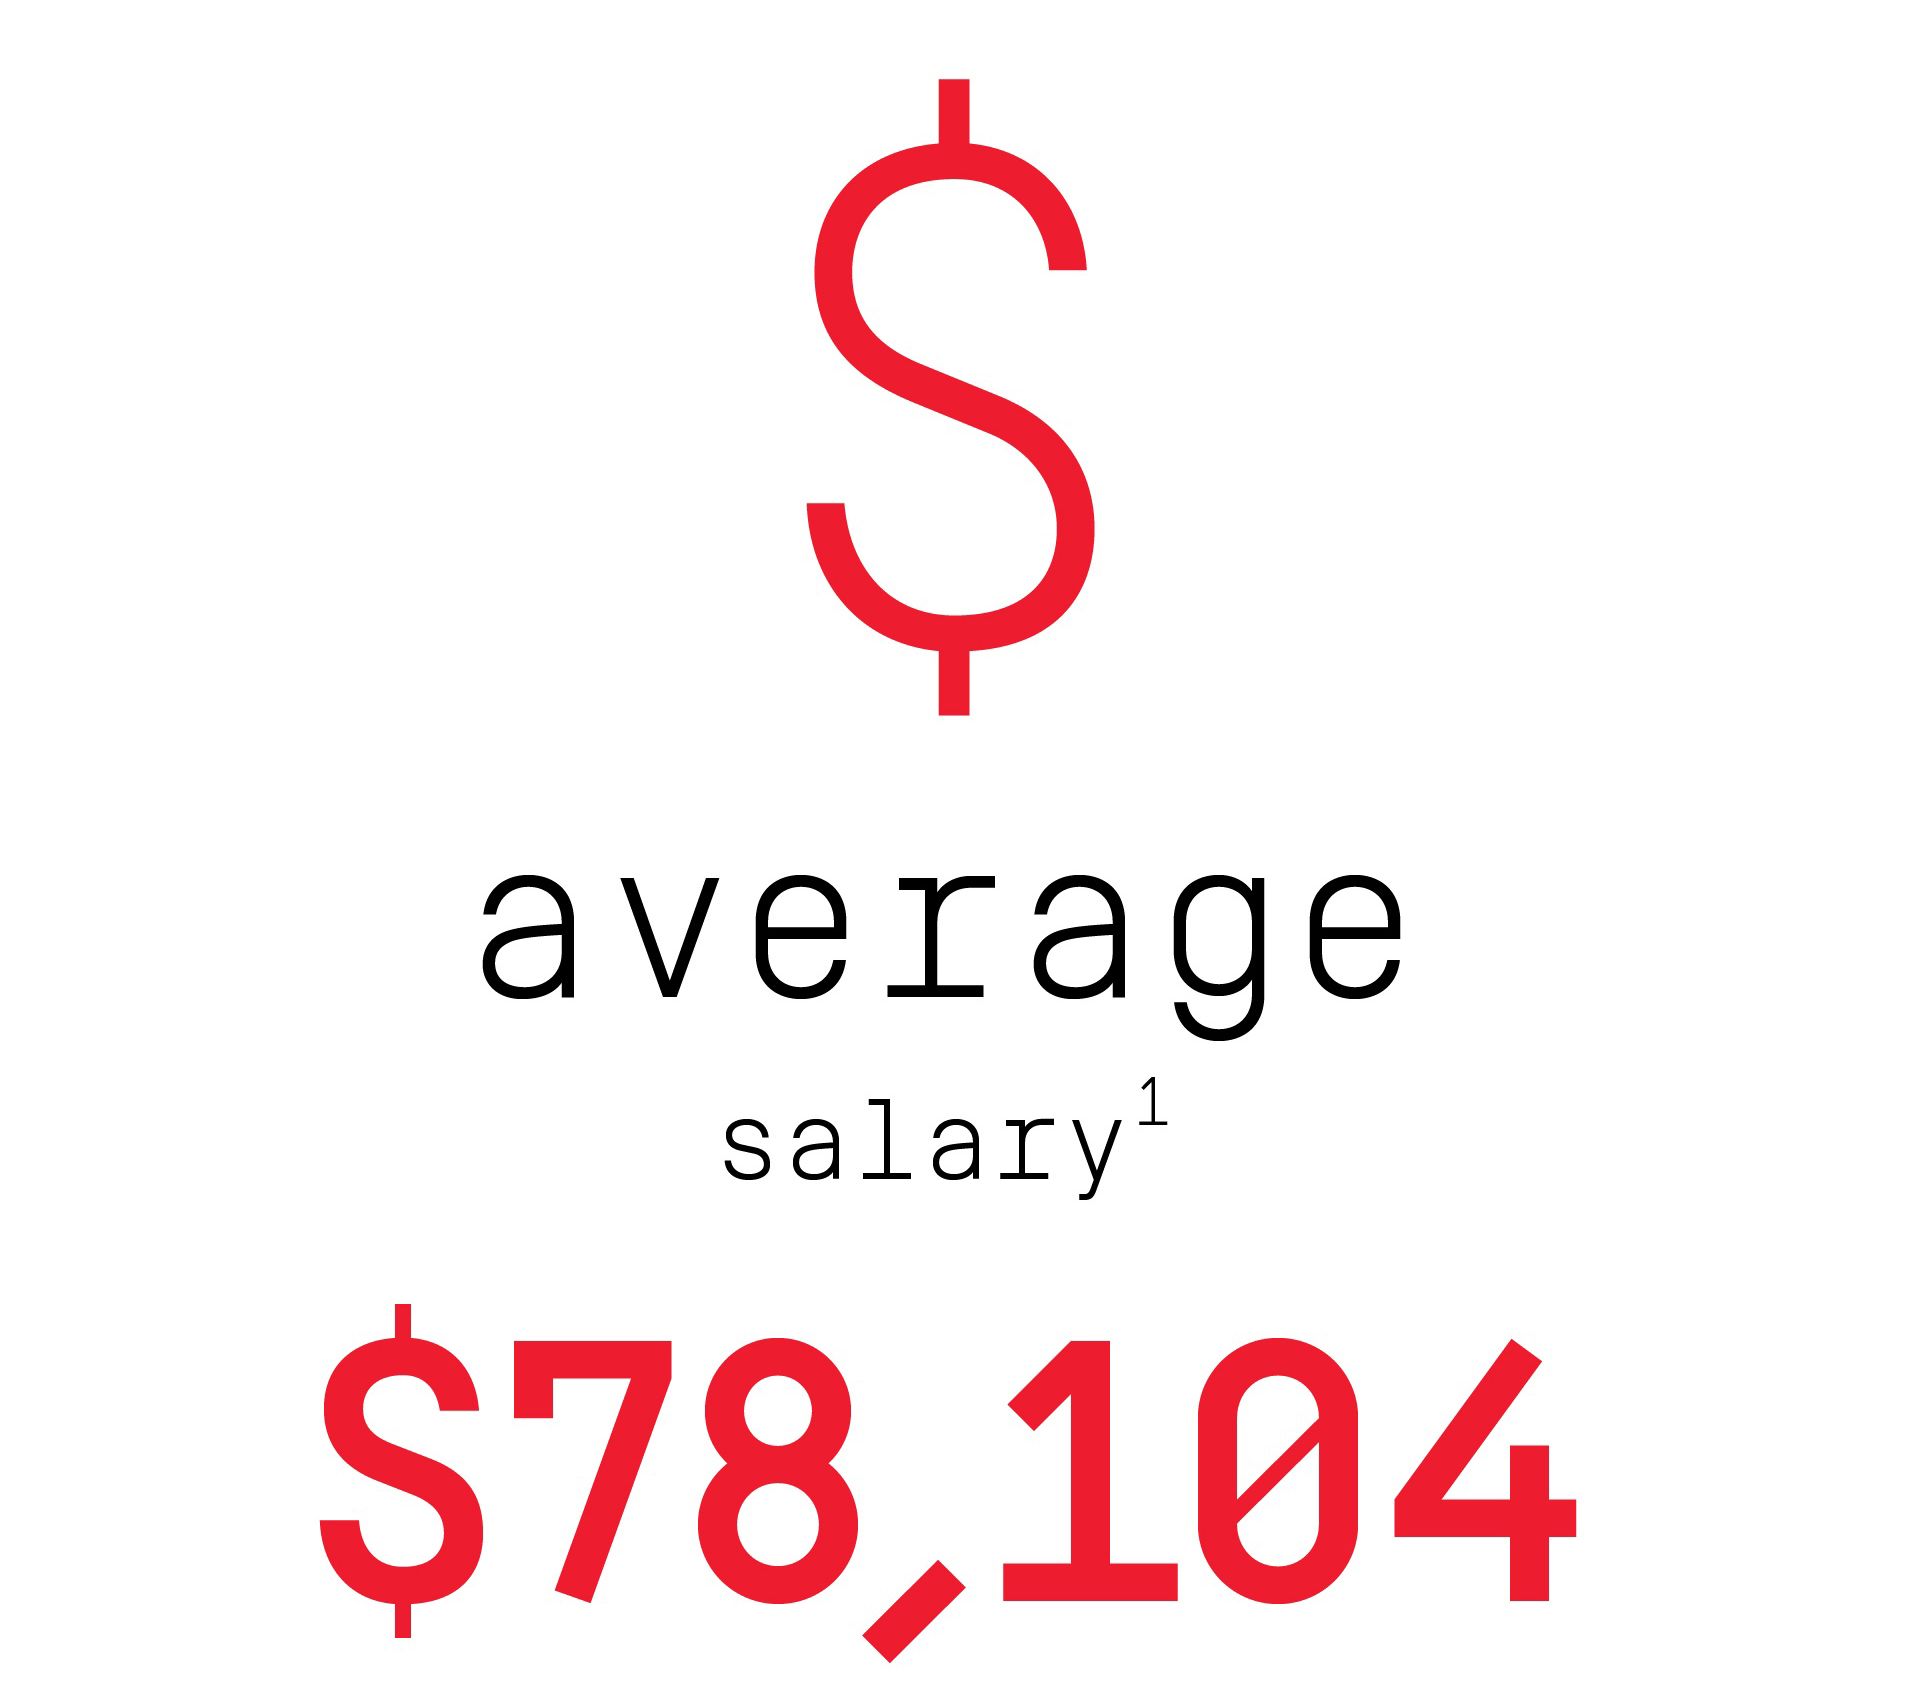 $78, 104 average salary (footnote 1).